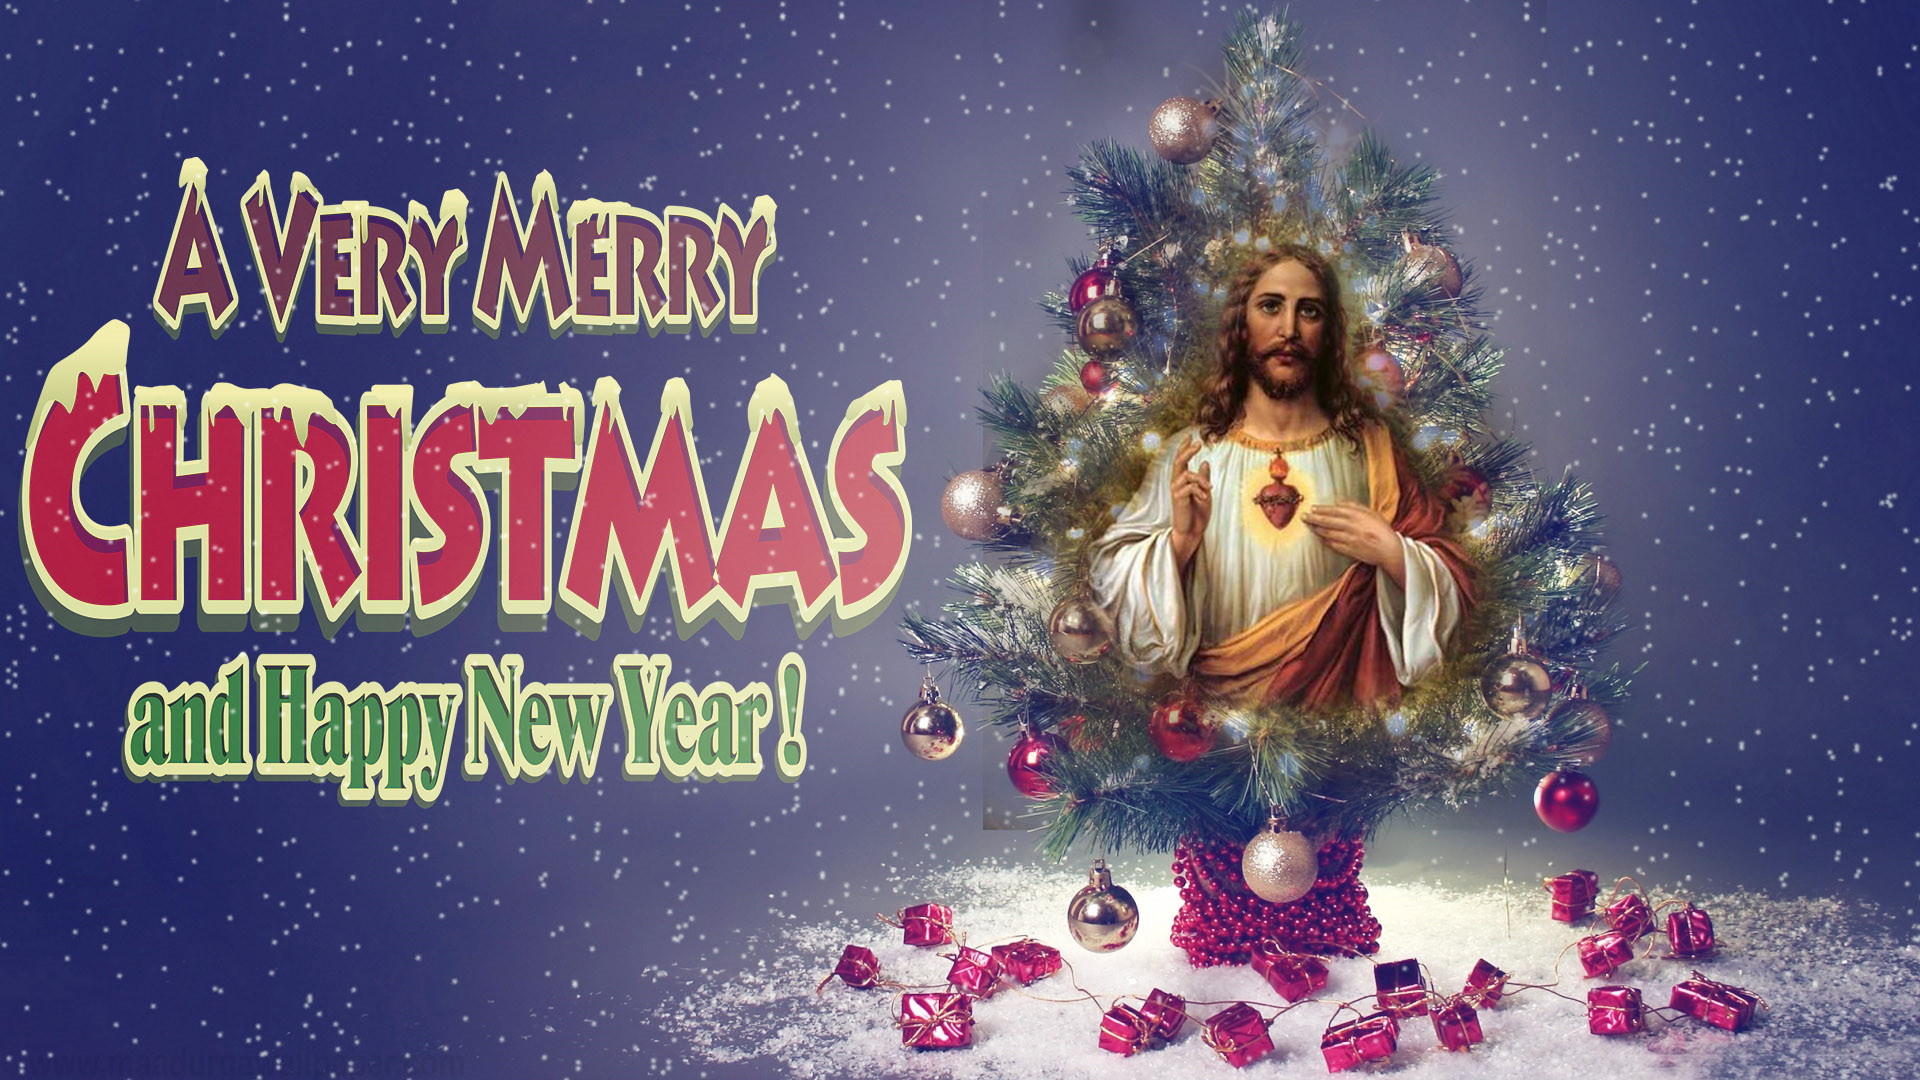 50 Free Catholic Christmas Wallpaper Backgrounds  WallpaperSafari